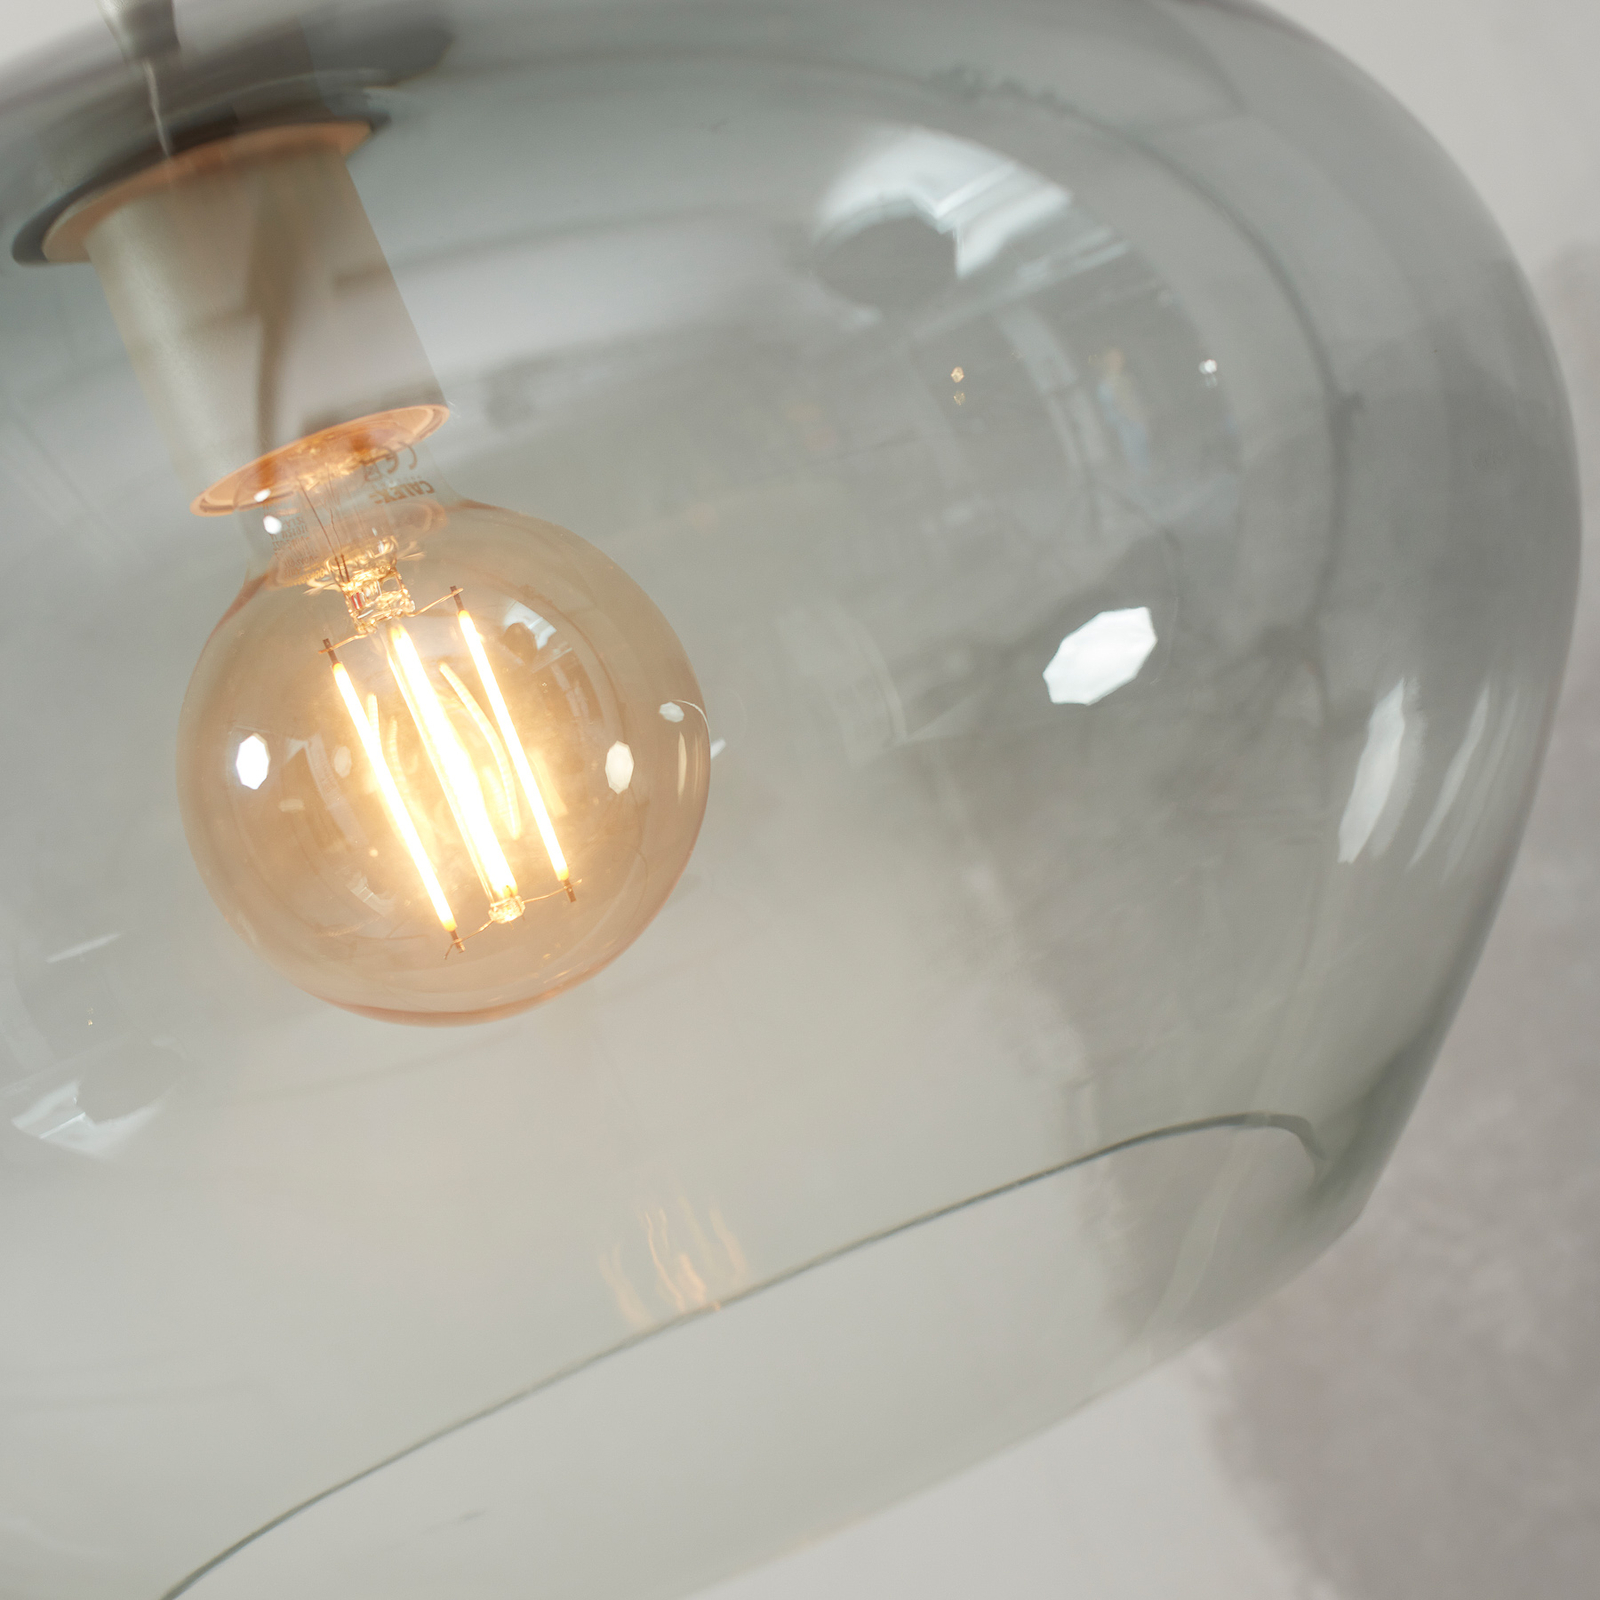 Het gaat om RoMi hanglamp Bologna, lichtgrijs, 1-lamp